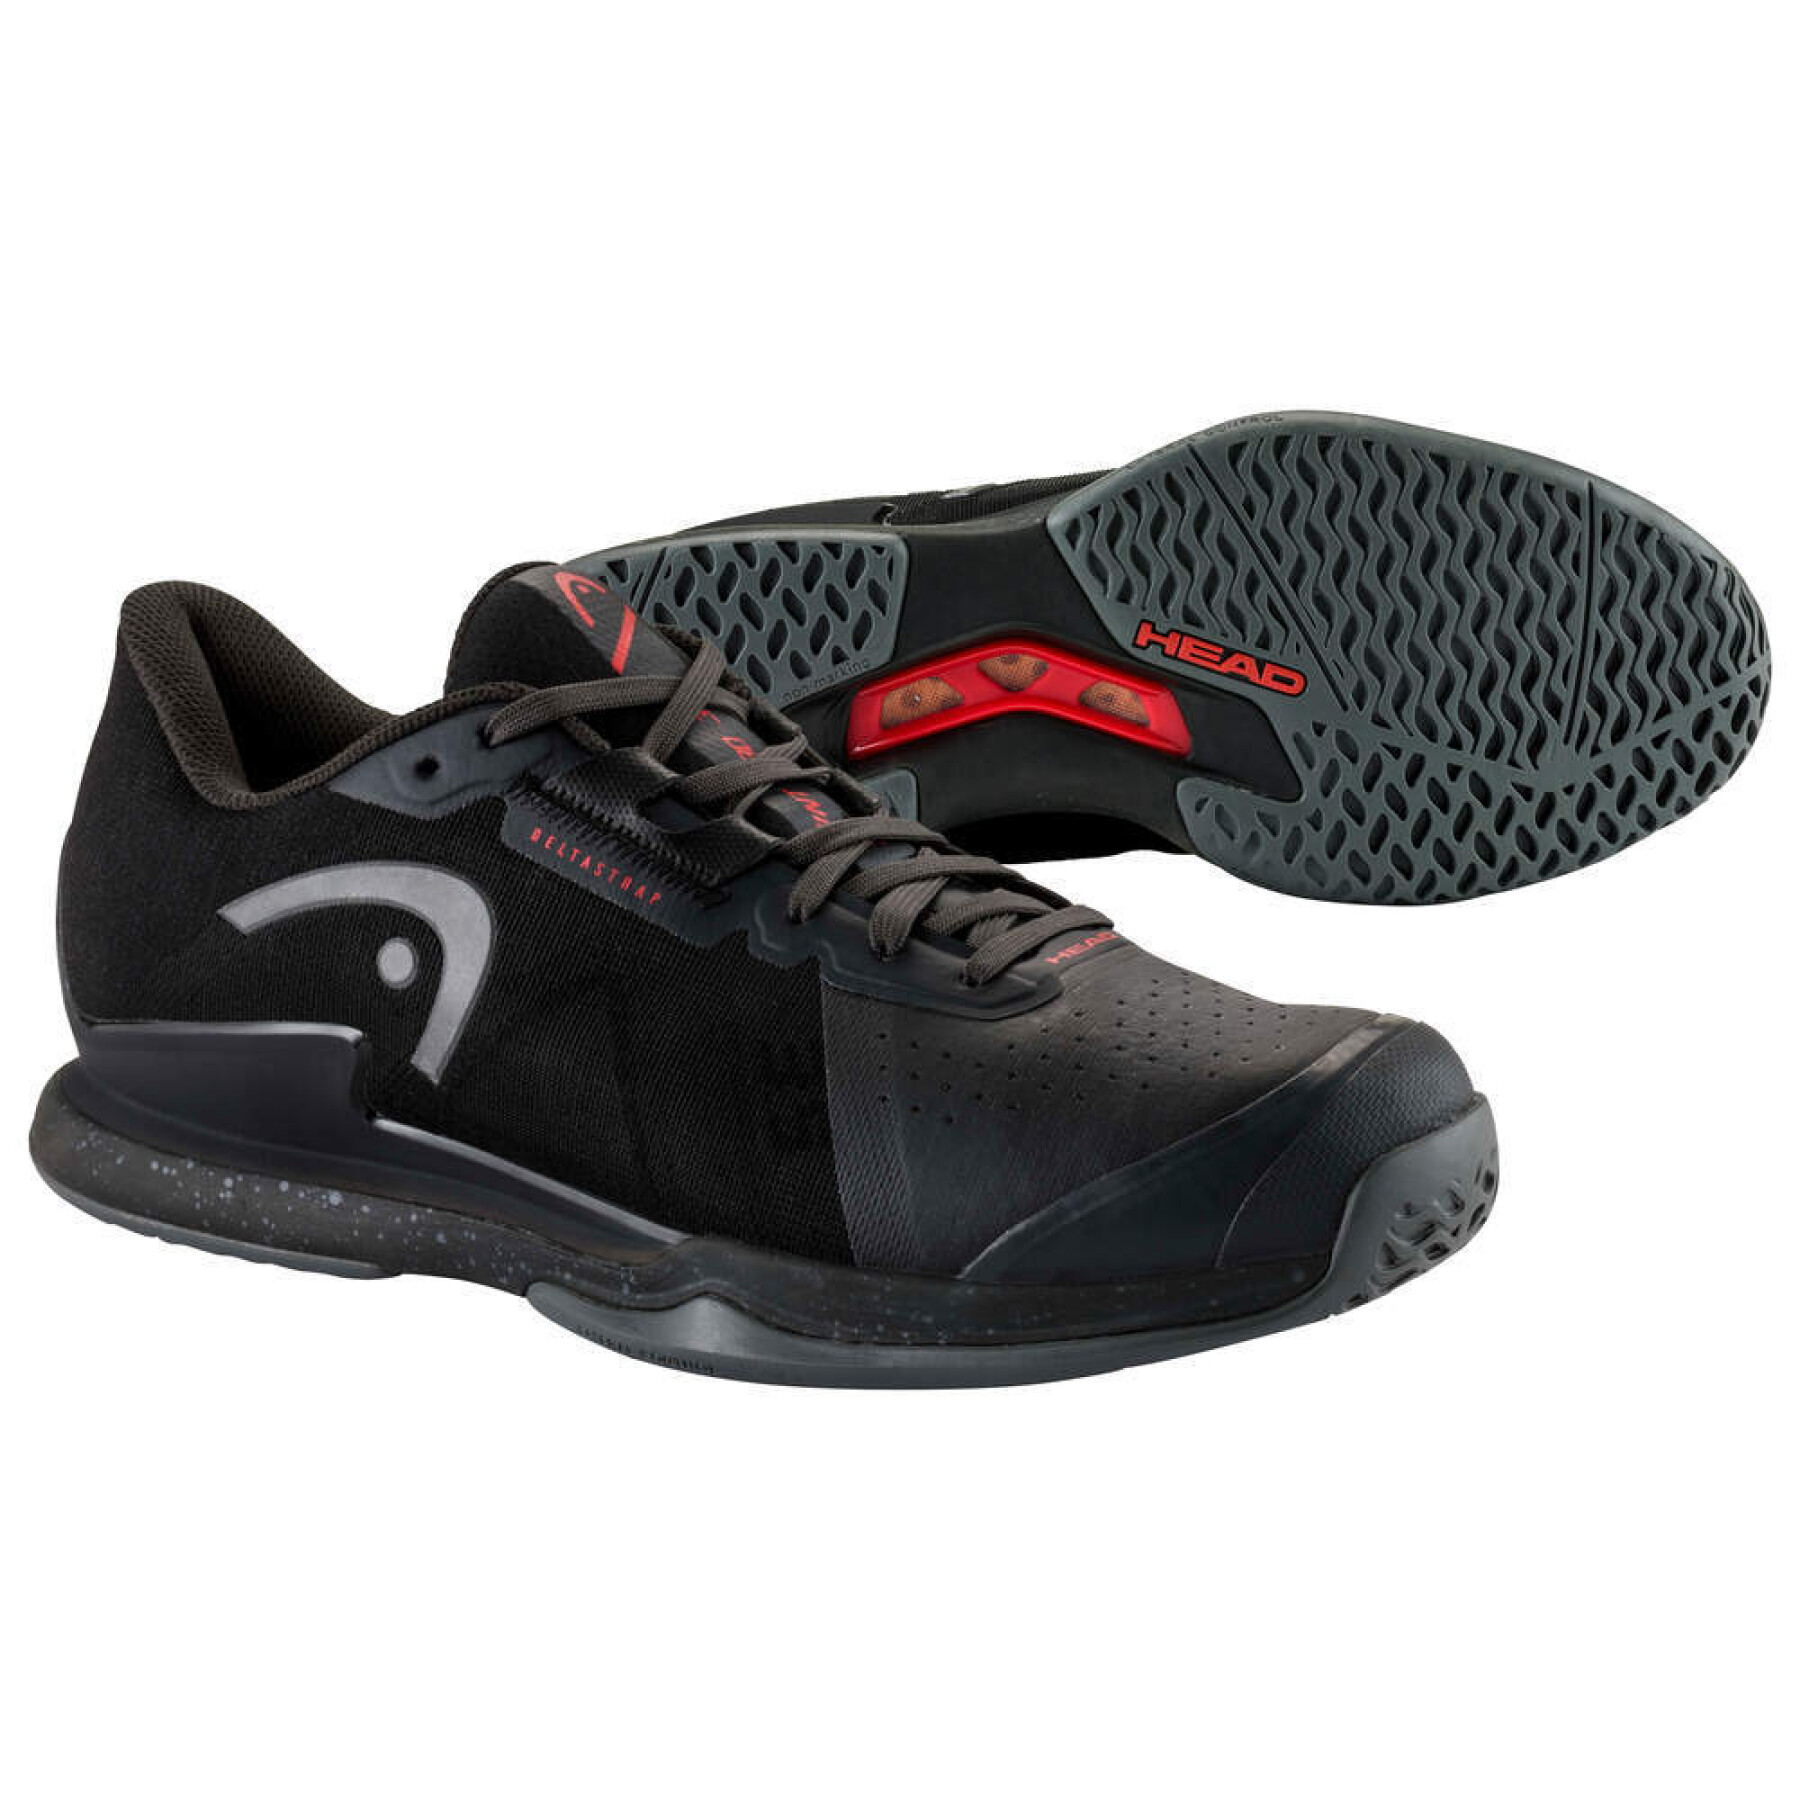 Chaussures de tennis Head Sprint Pro 3.5